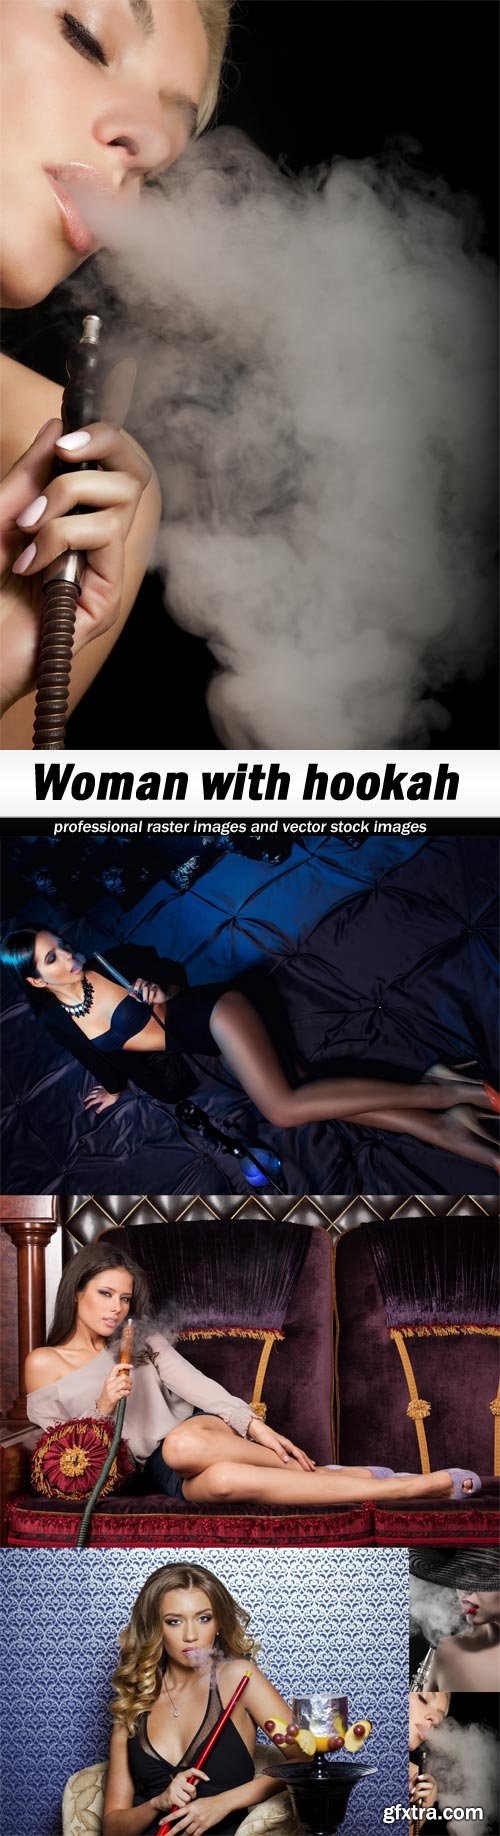 Woman with hookah - 5 UHQ JPEG